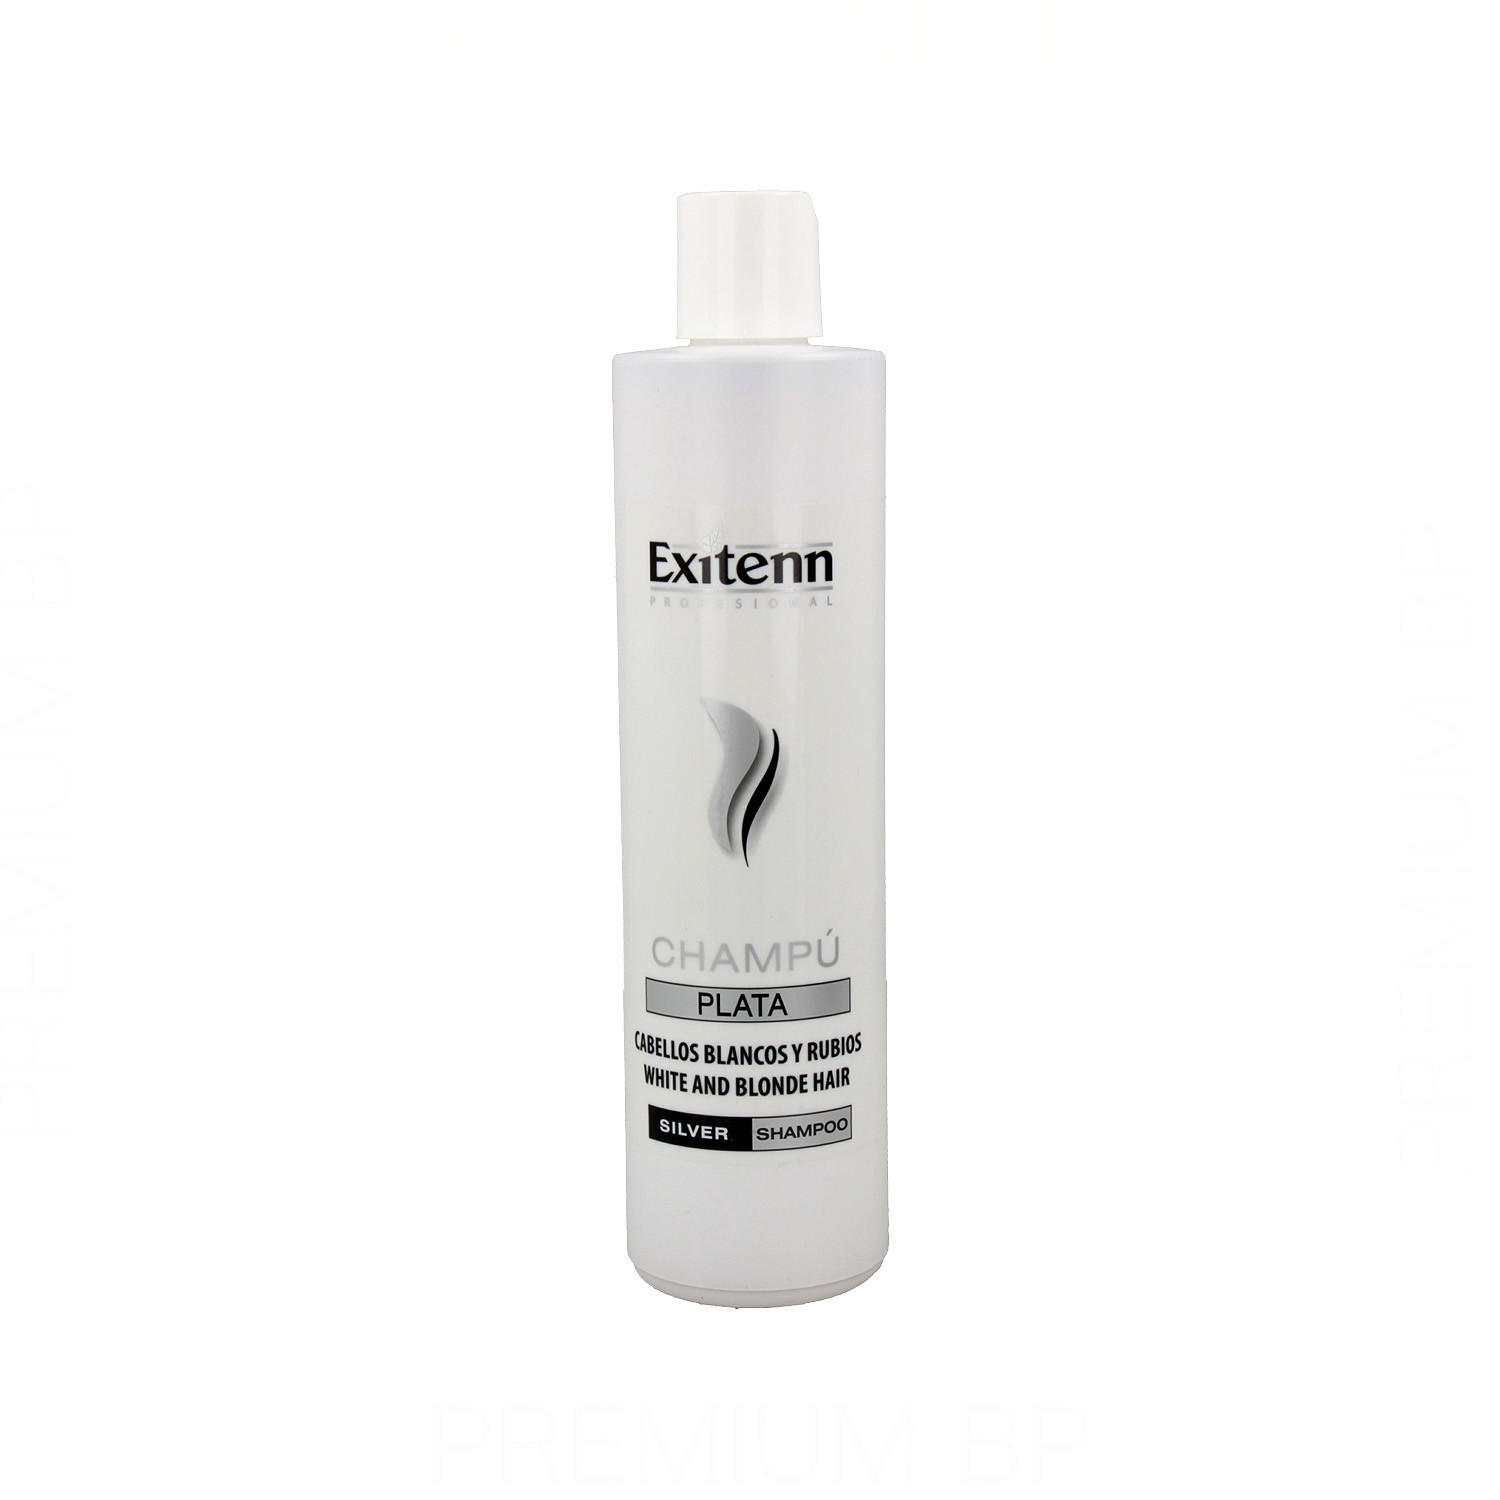 Exitenn Silver Silver & Blonds Shampoo 500 ml